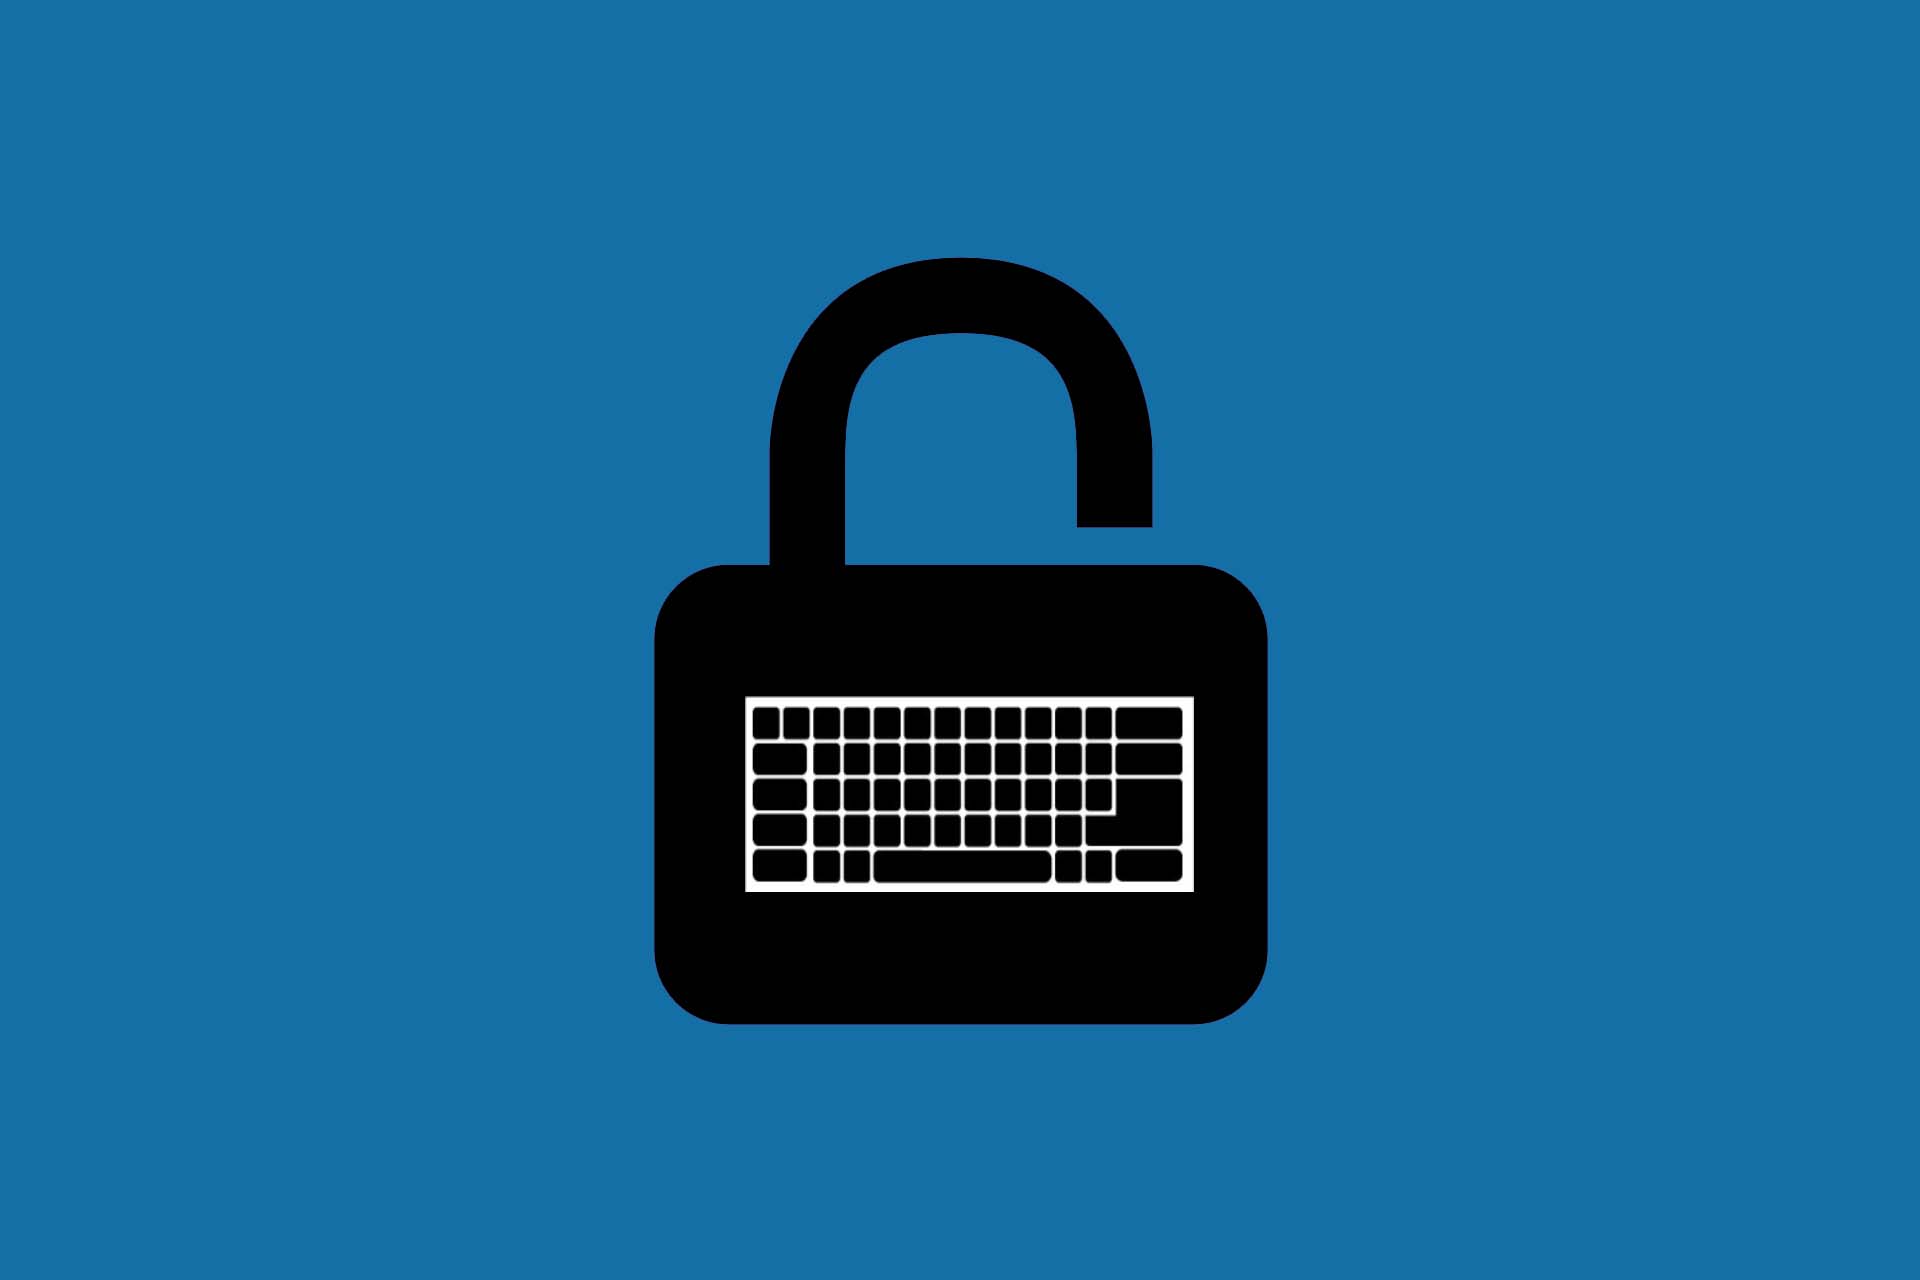 t2informatik Blog: Secure password wanted